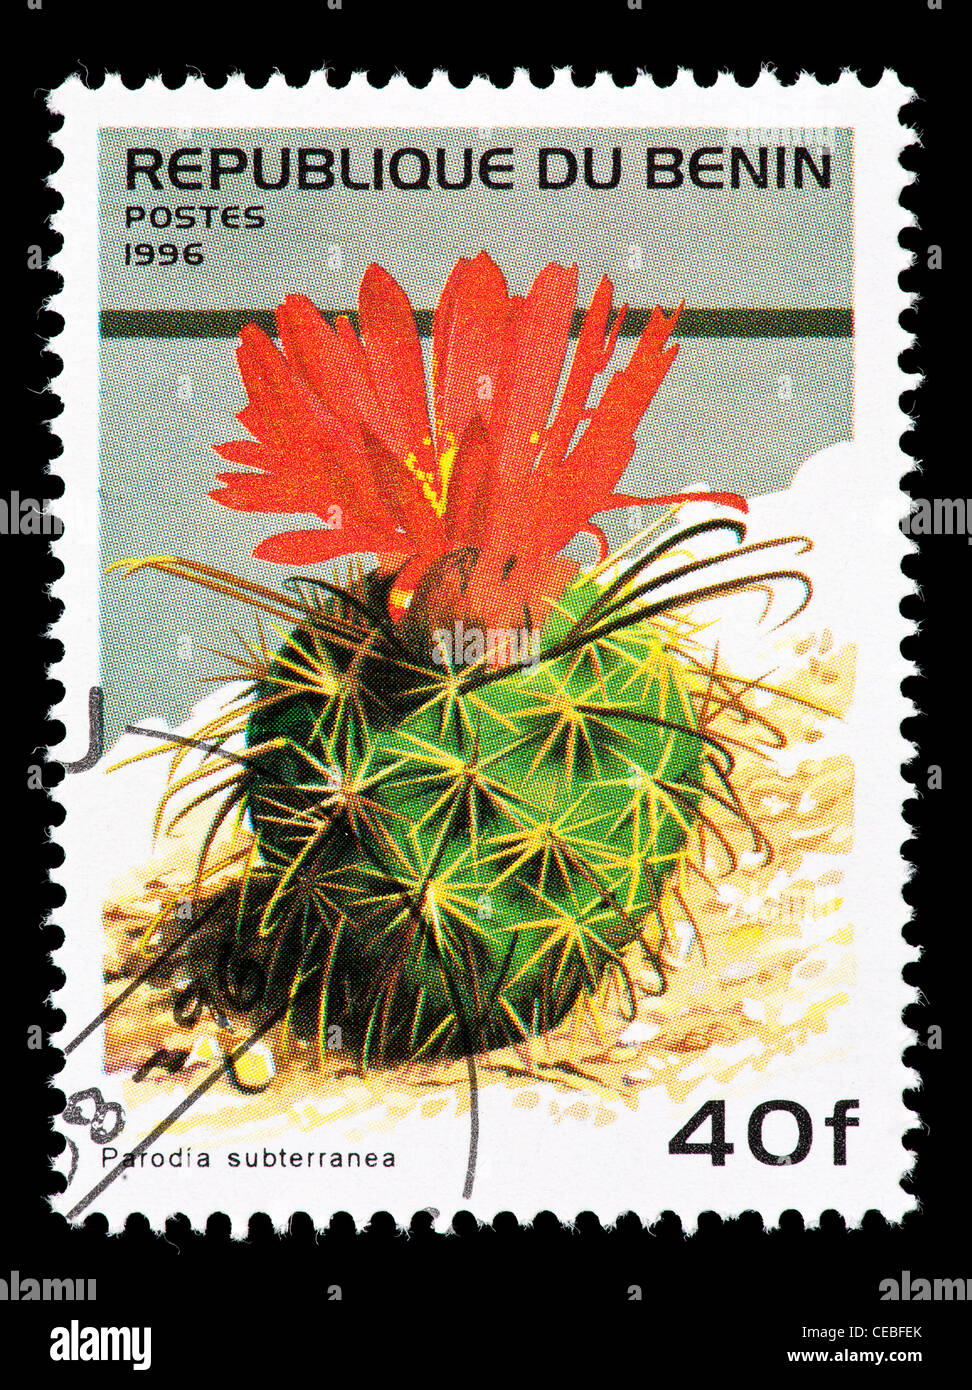 Postage stamp from Benin depicting a flowering cactus (Parodia subterranea) Stock Photo